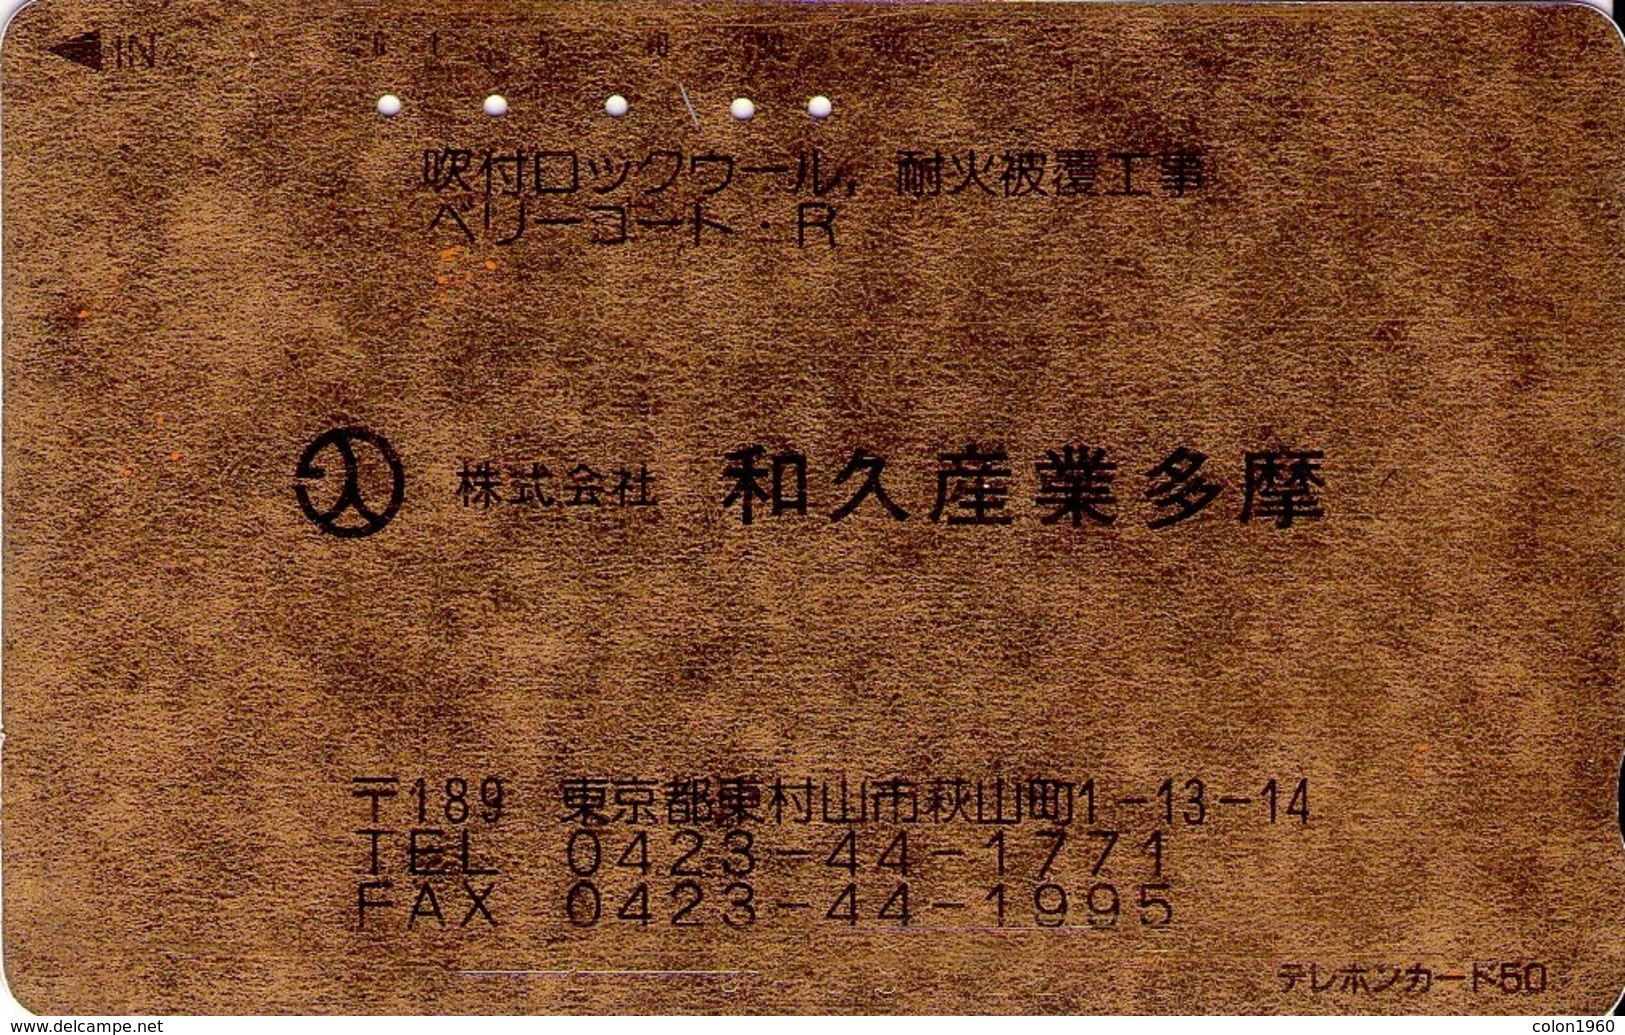 JAPON. Gold Card, TEL: 0423-44-1771. JP-110-118. (141) - Japón